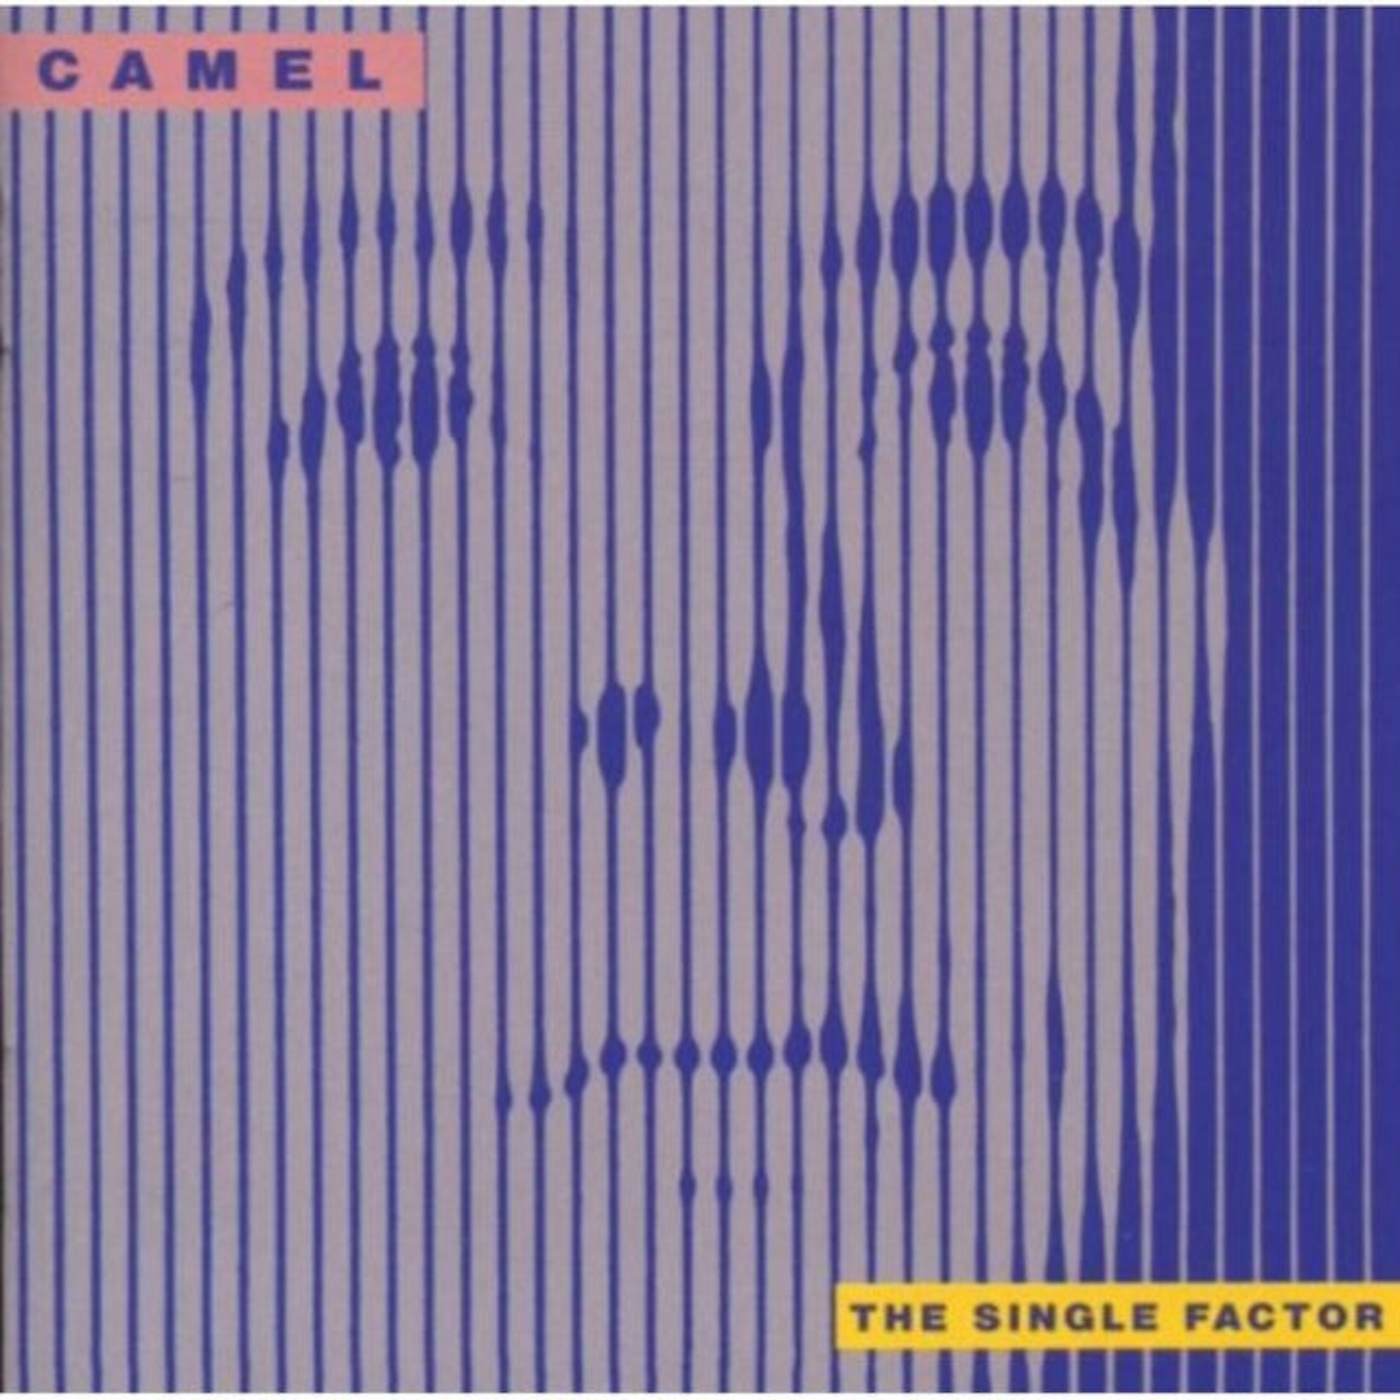 Camel CD - Single Factor